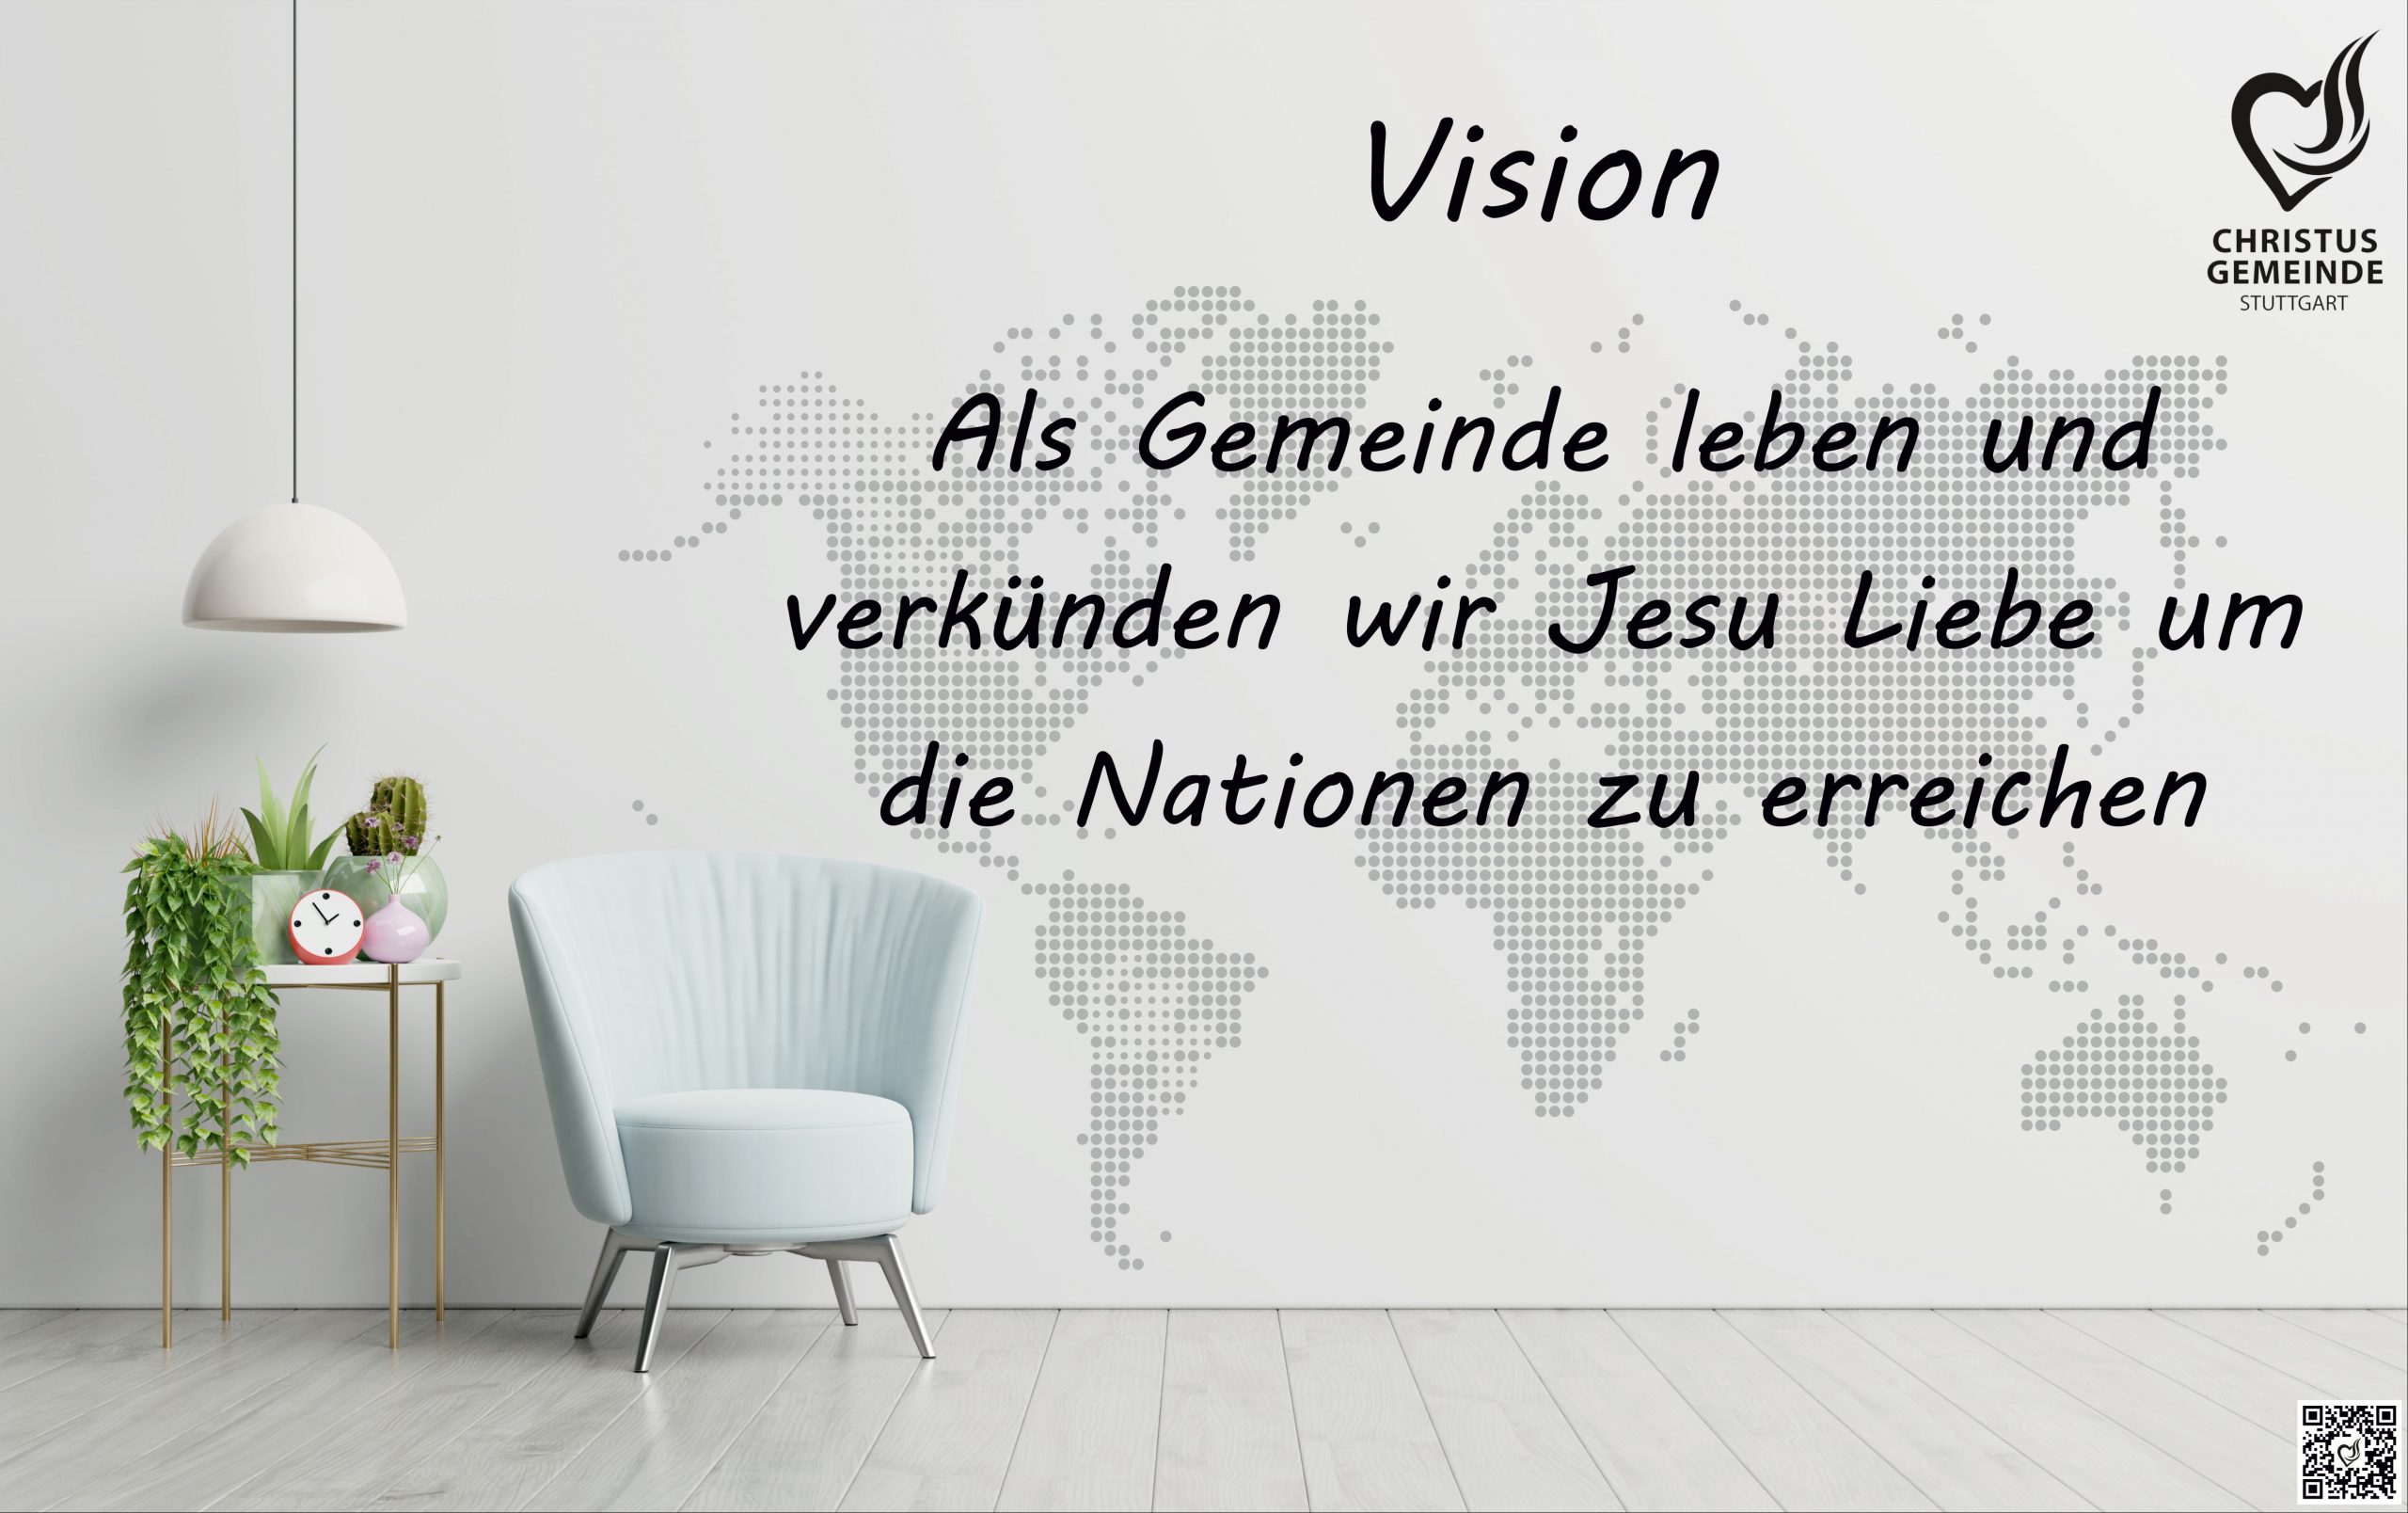 Vision CG Stuttgart